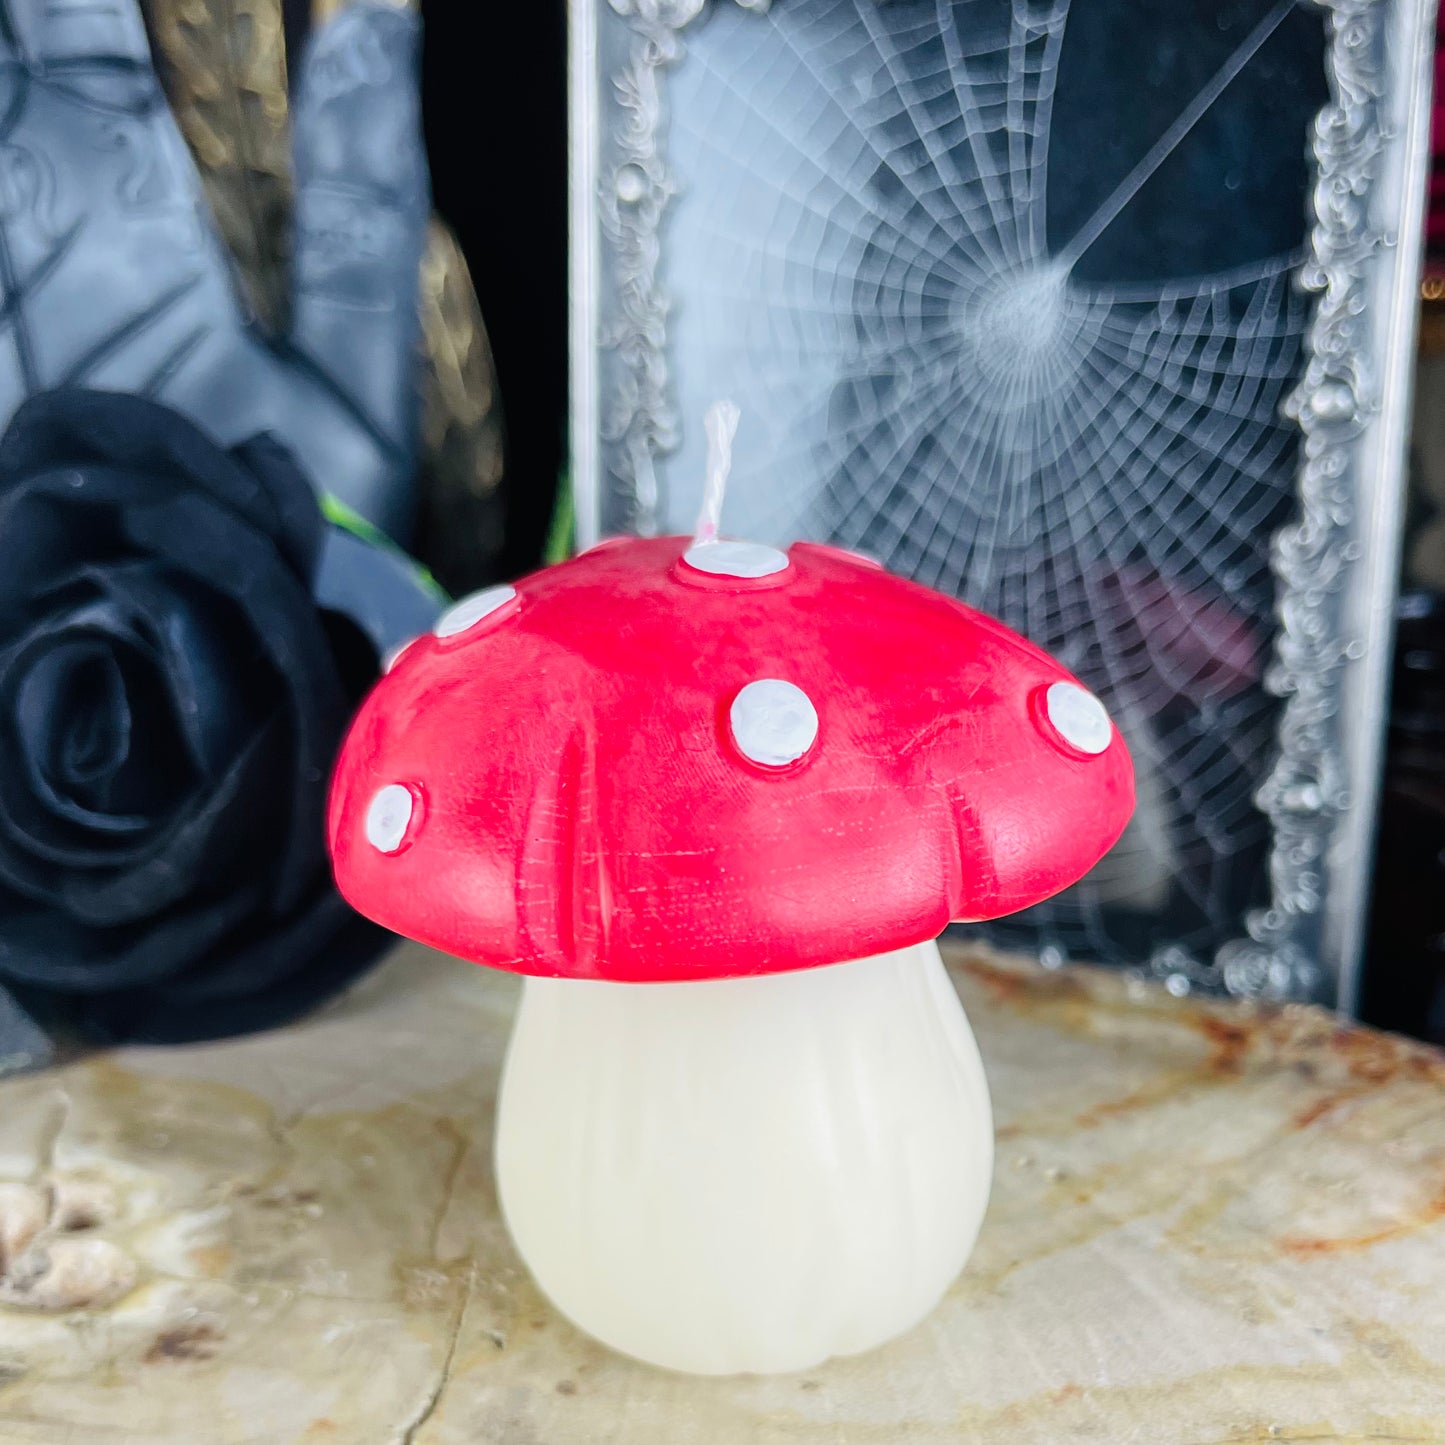 AMANITA Mushroom Candle